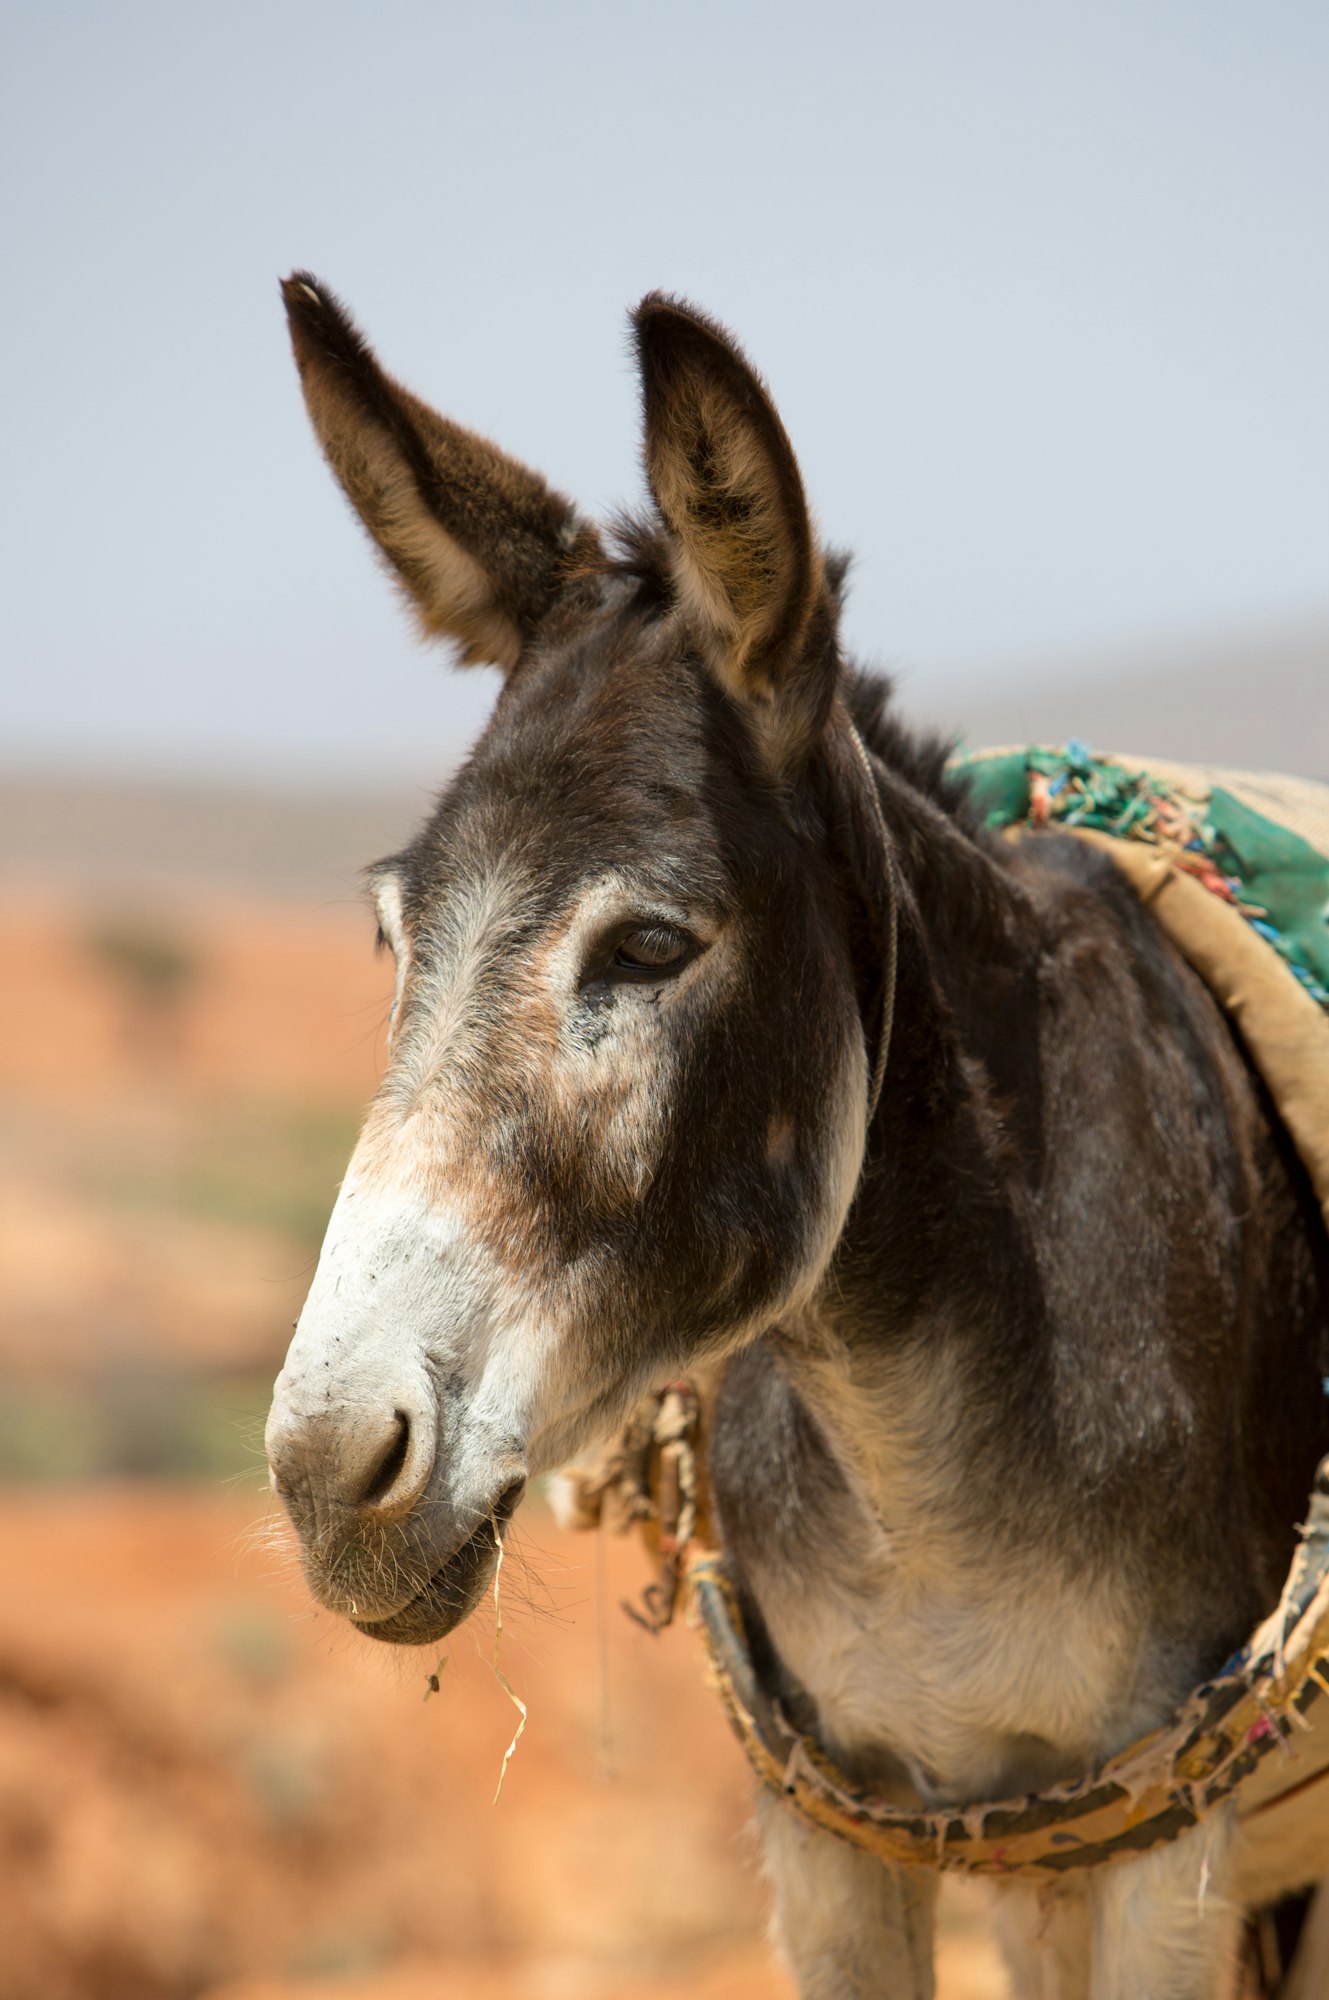 Portrait of Donkey in Morocco